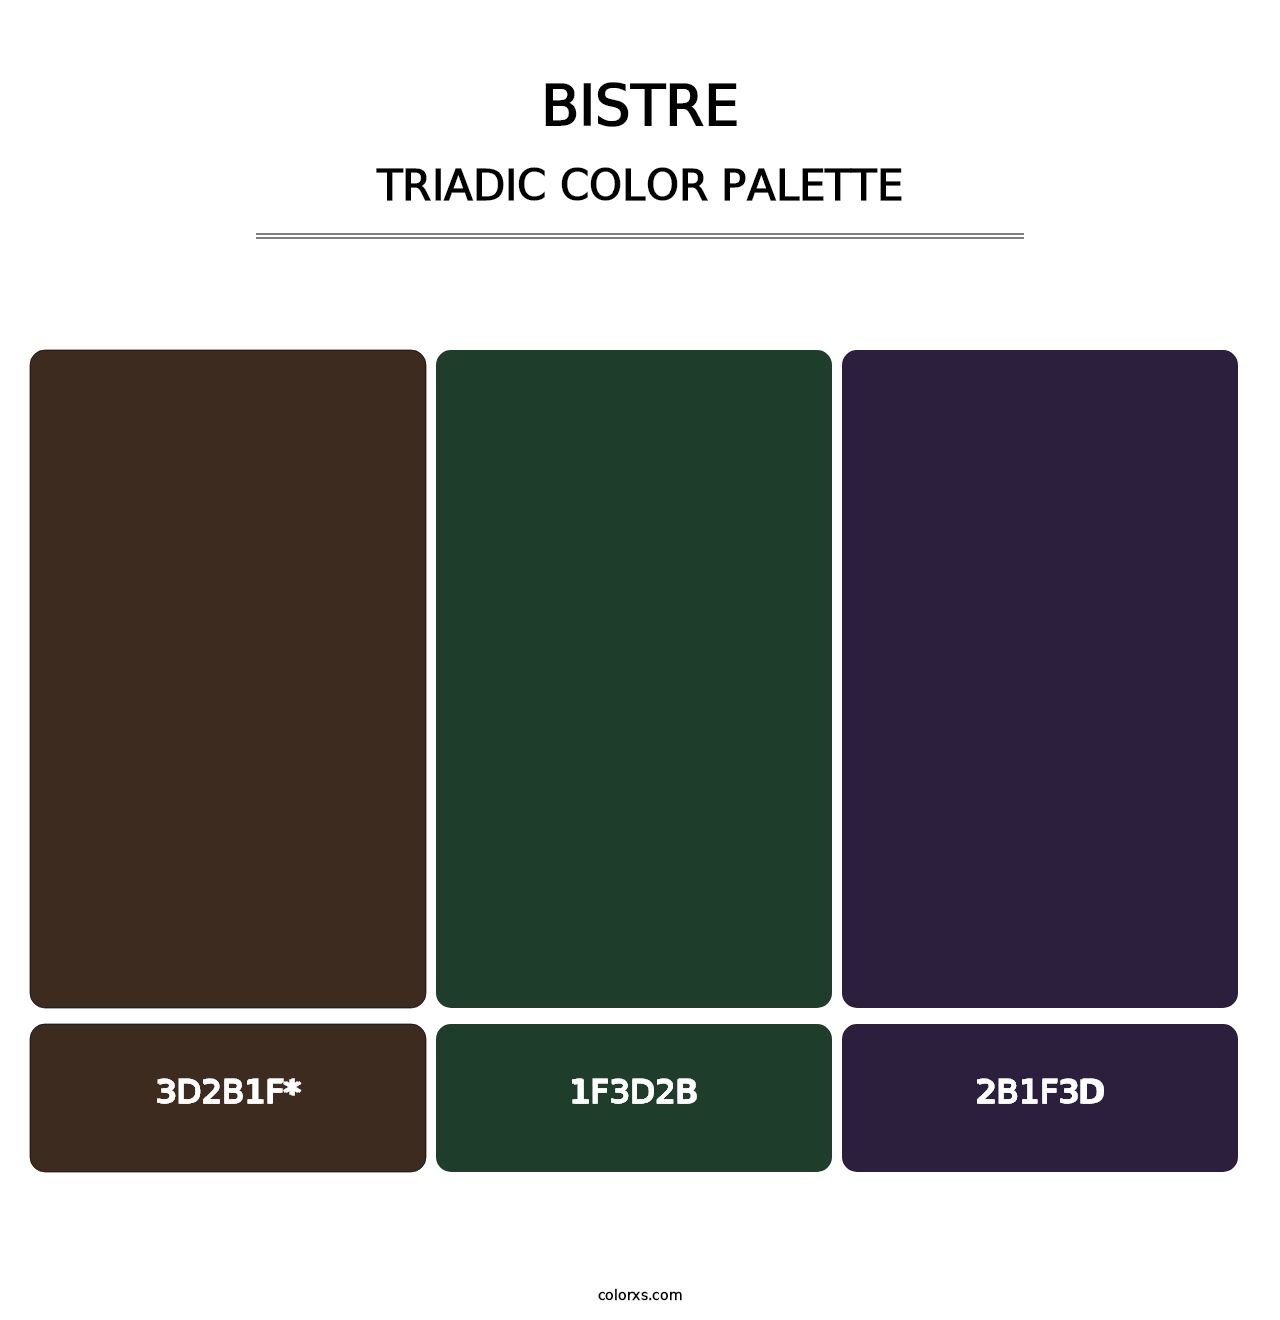 Bistre - Triadic Color Palette